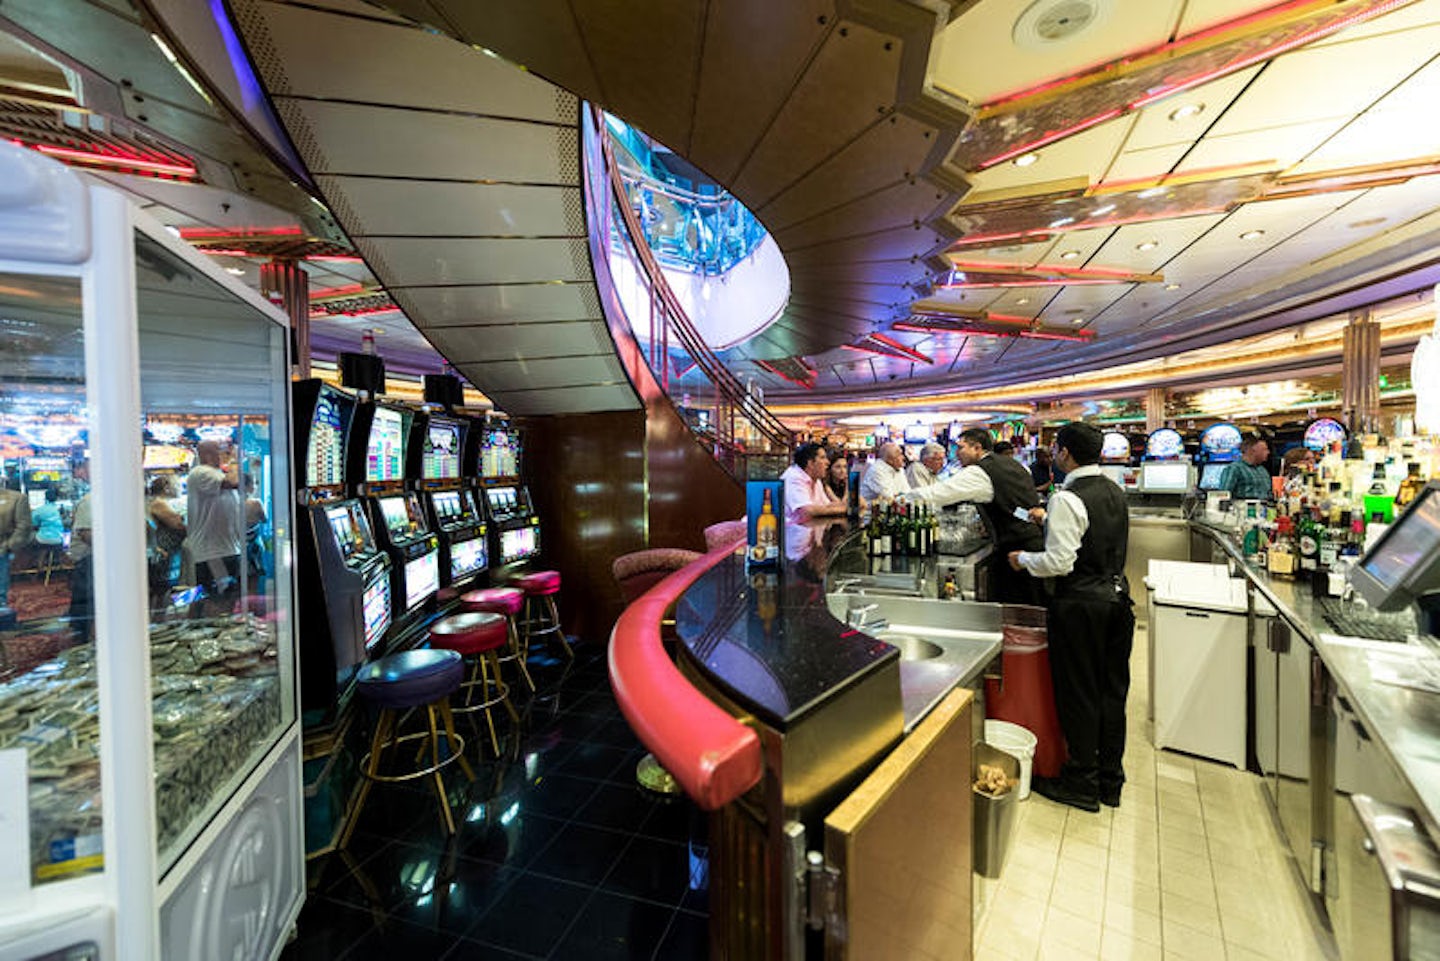 Casino Bar on Adventure of the Seas